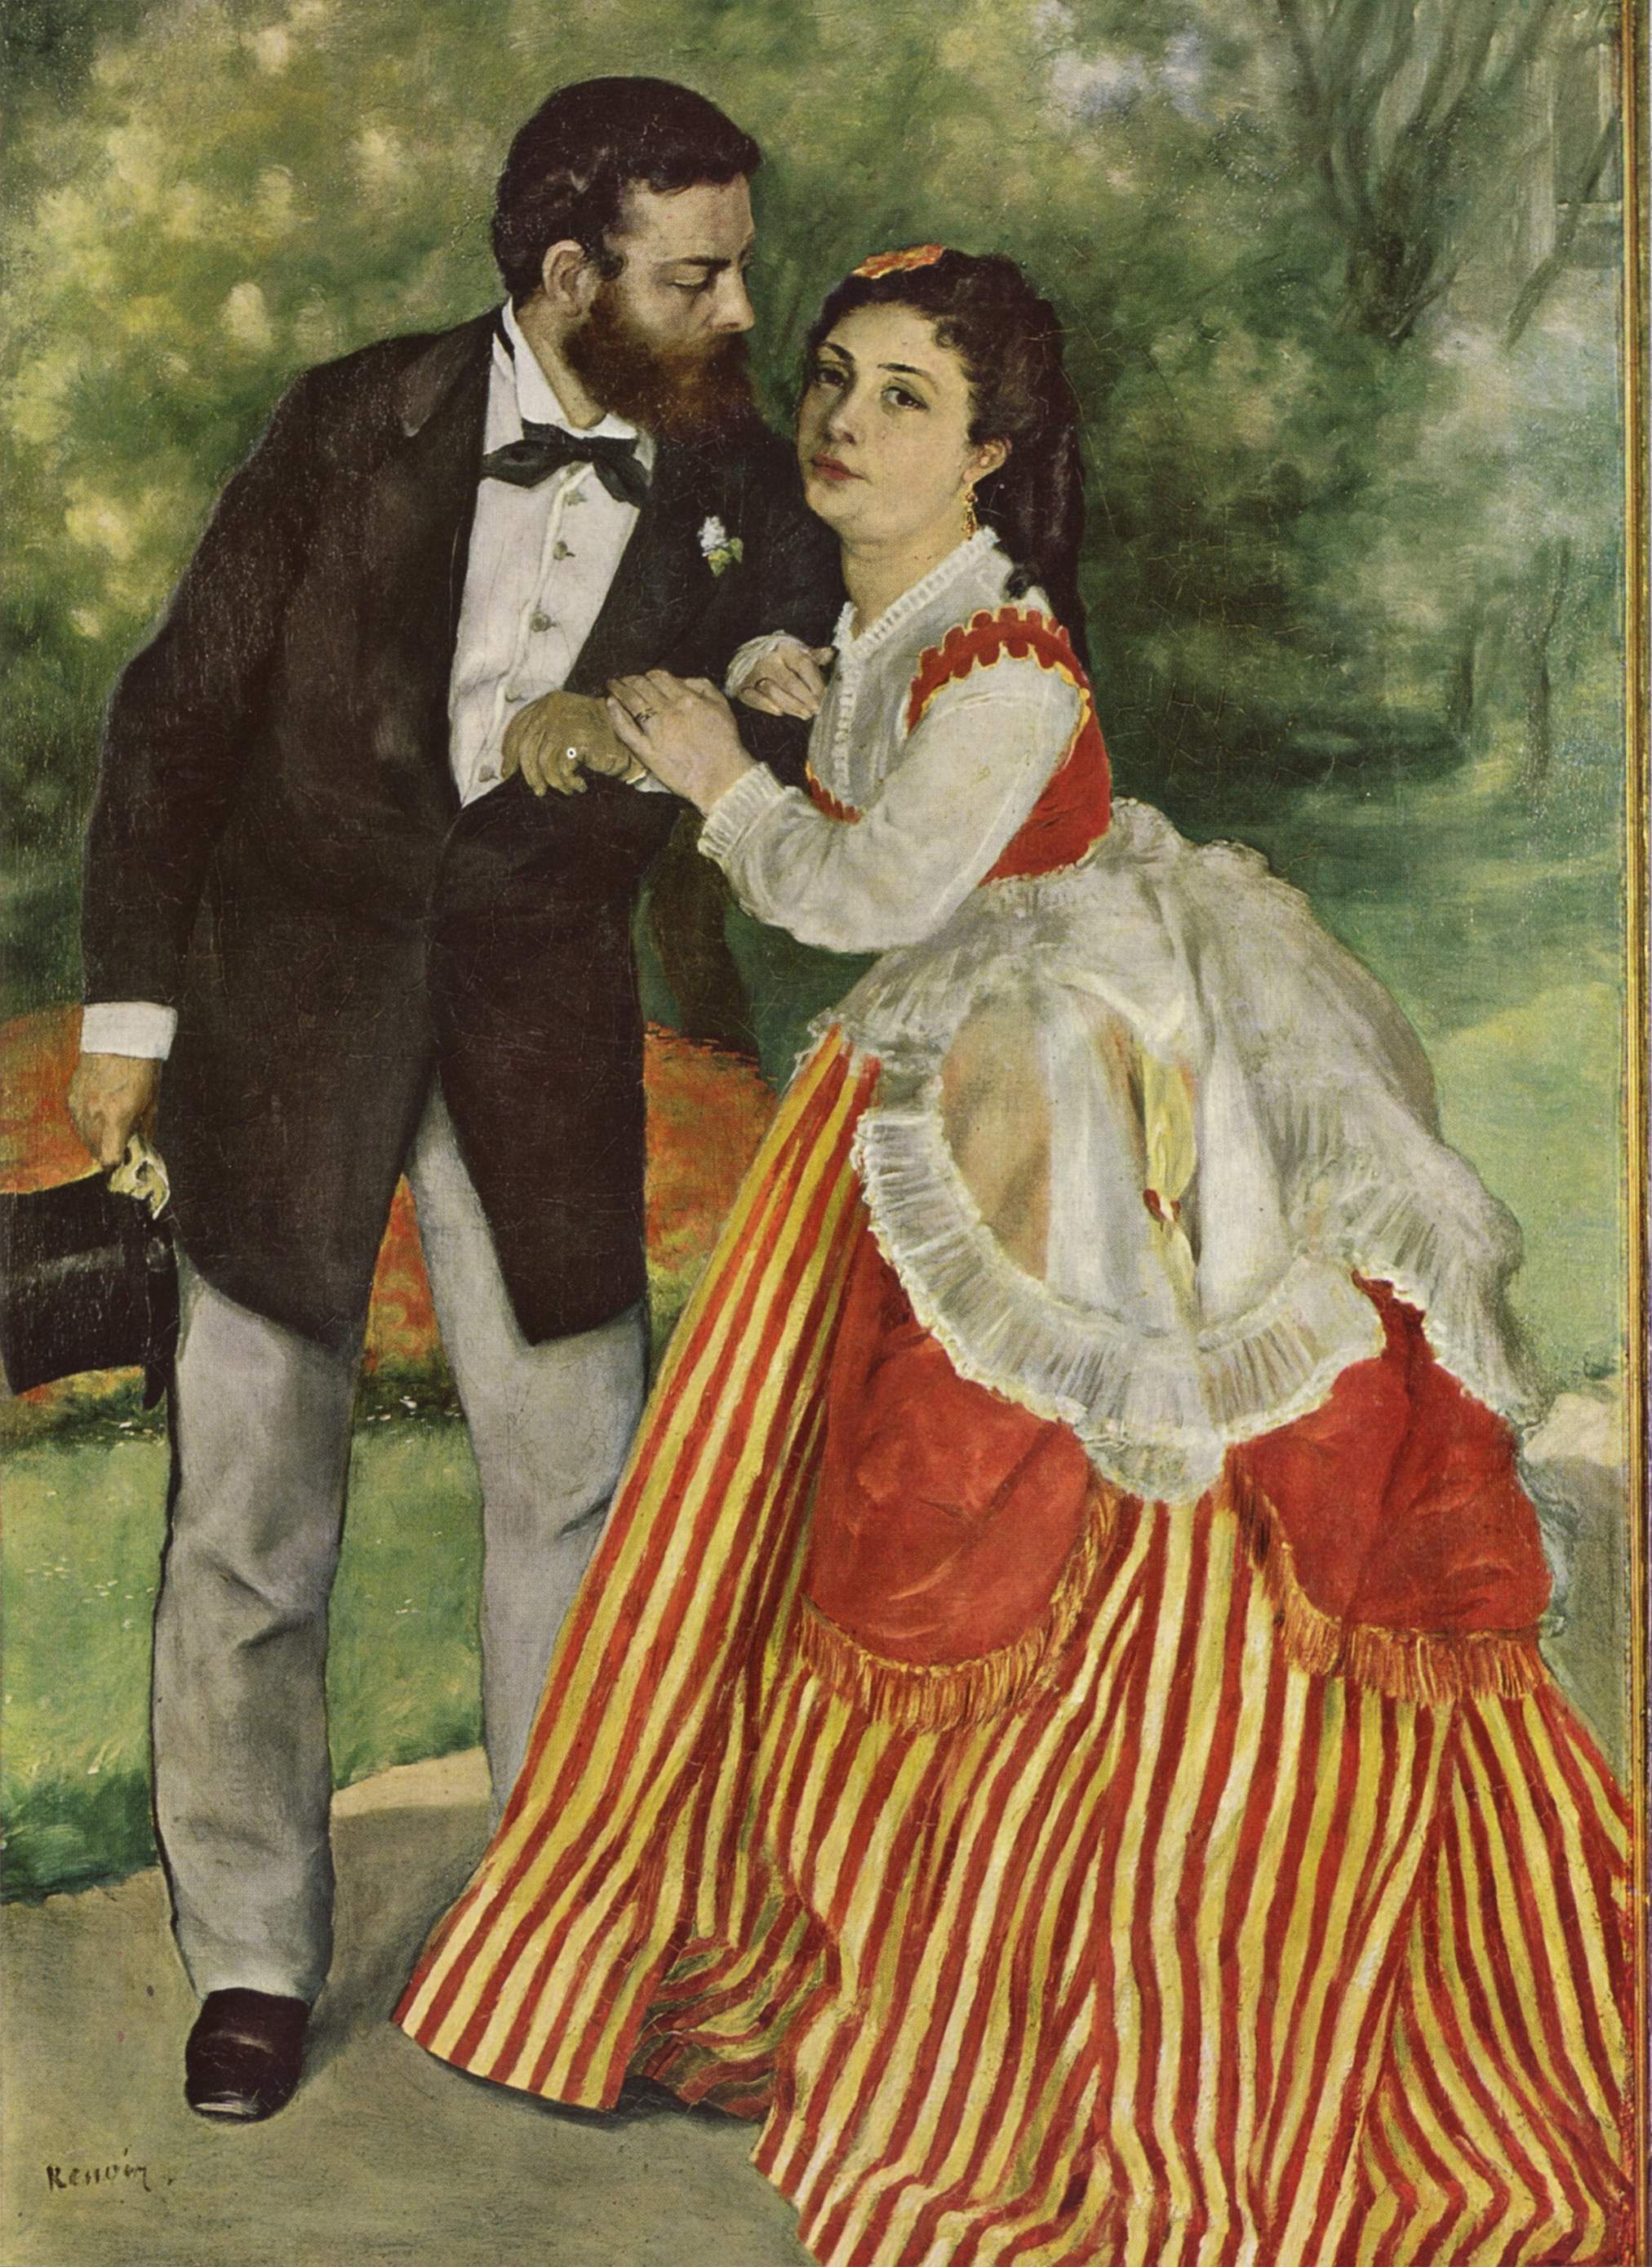 Portrait of the couple Sisley, 1868 - Pierre-Auguste Renoir - WikiArt.org